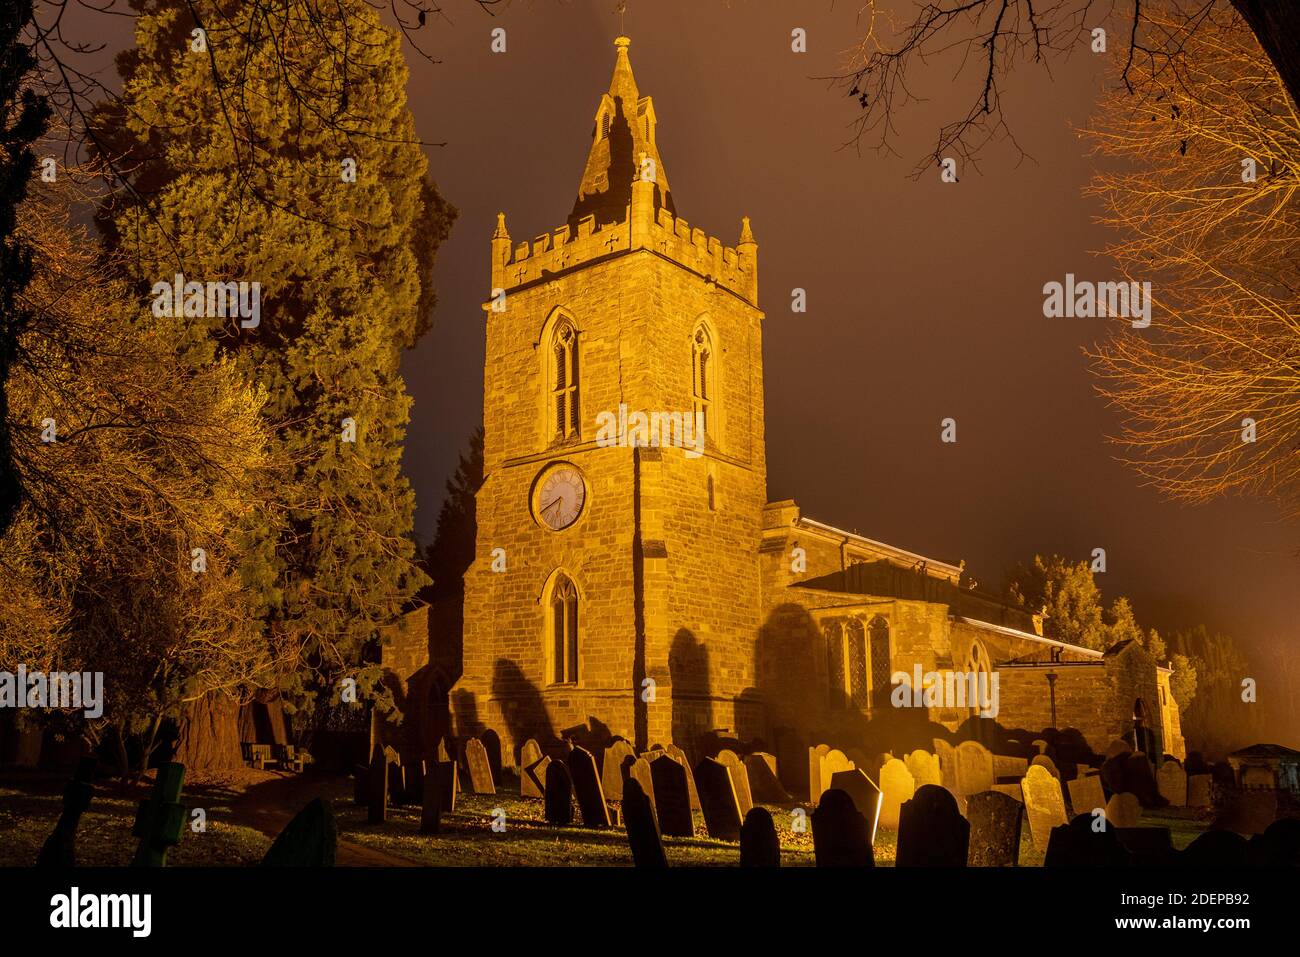 The church in Great Bowden on a dark foggy November night Stock Photo